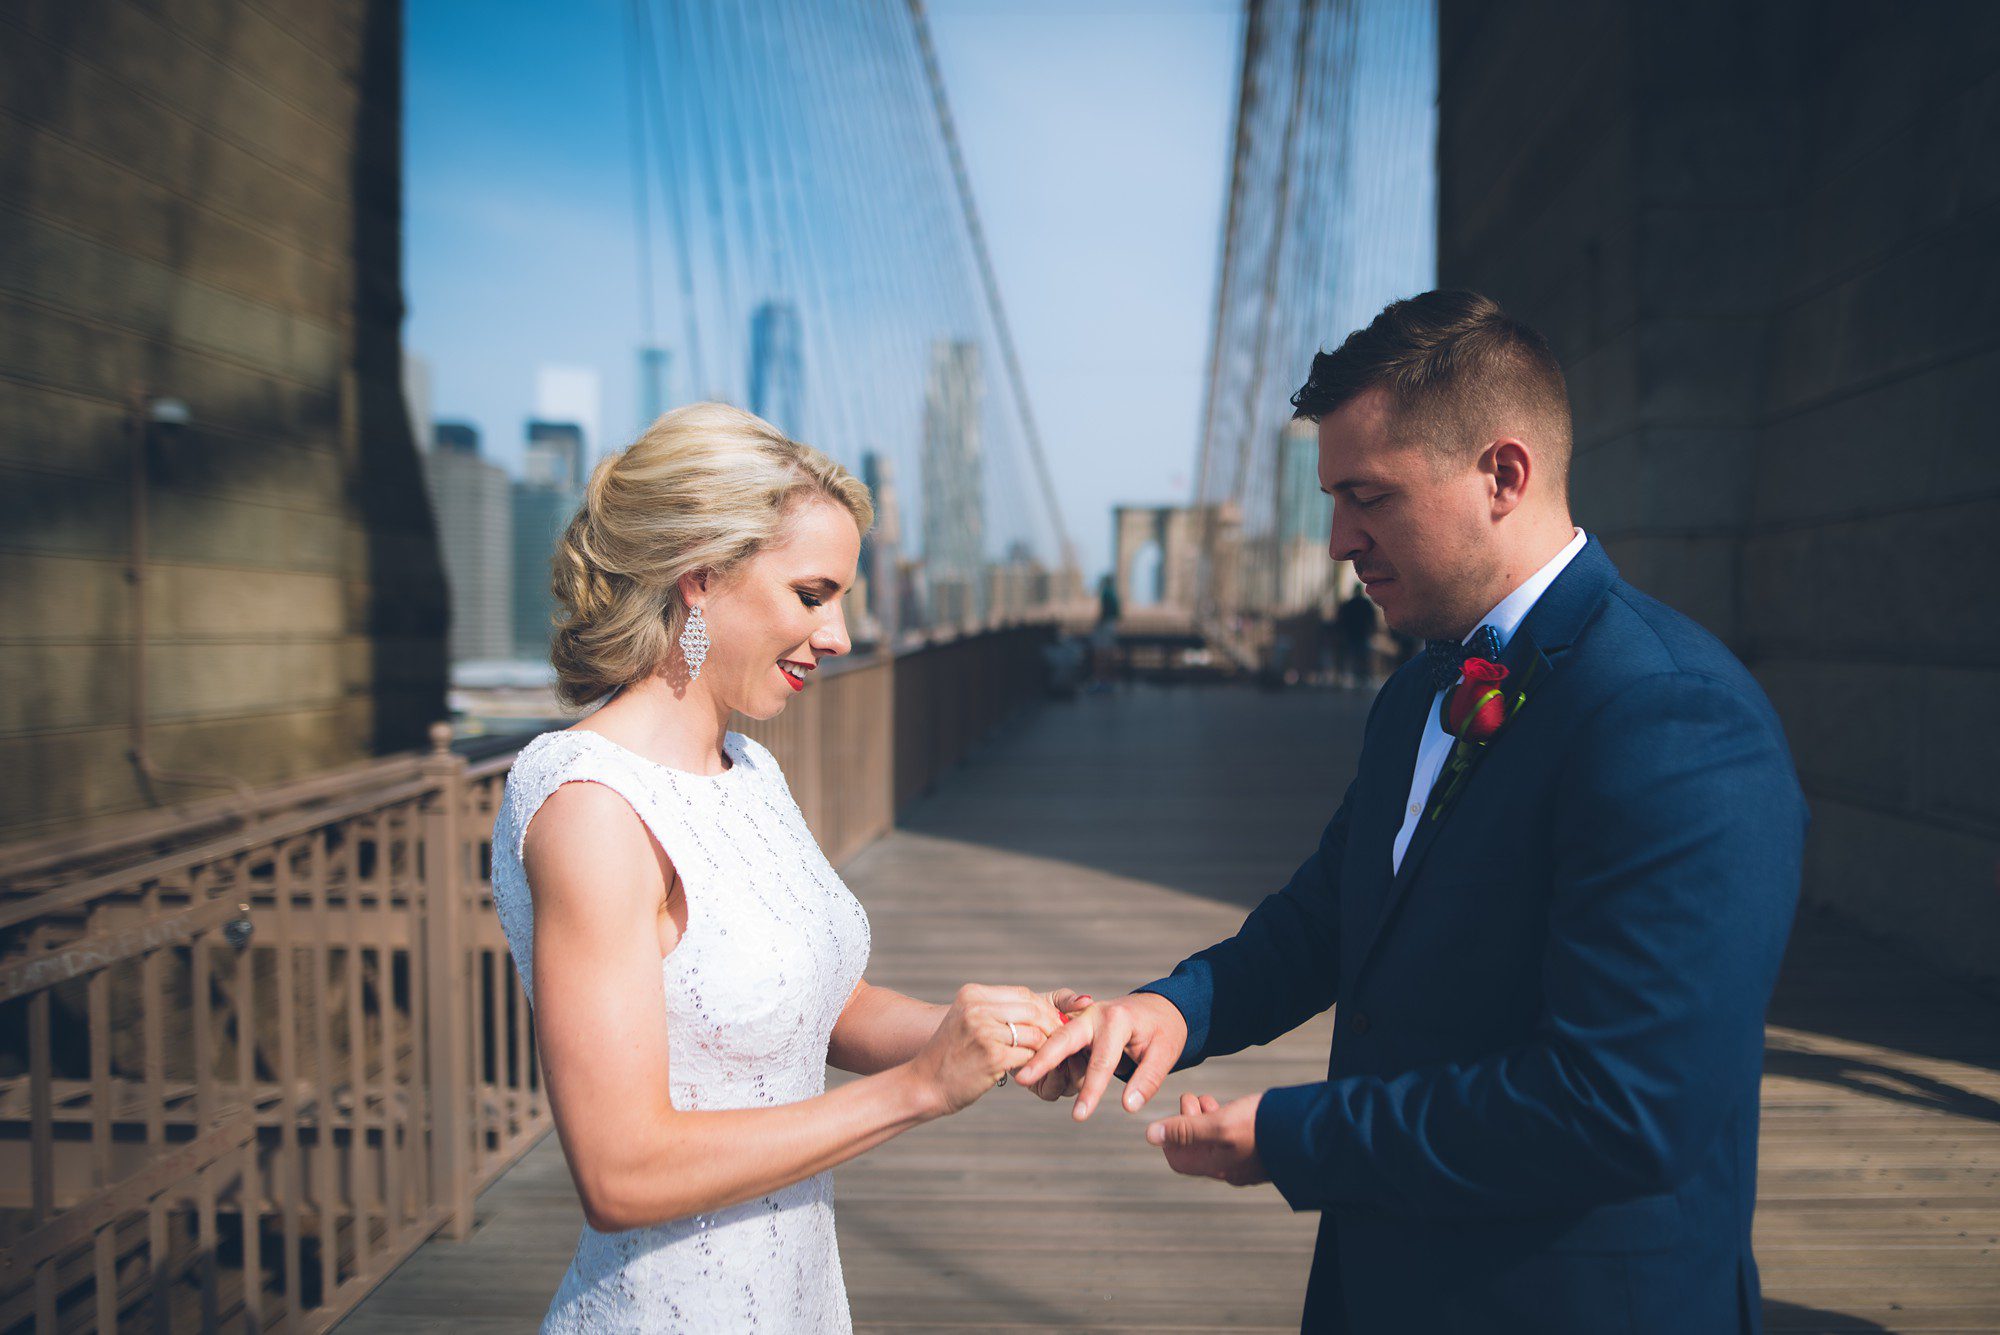 Top wedding locations in New York City